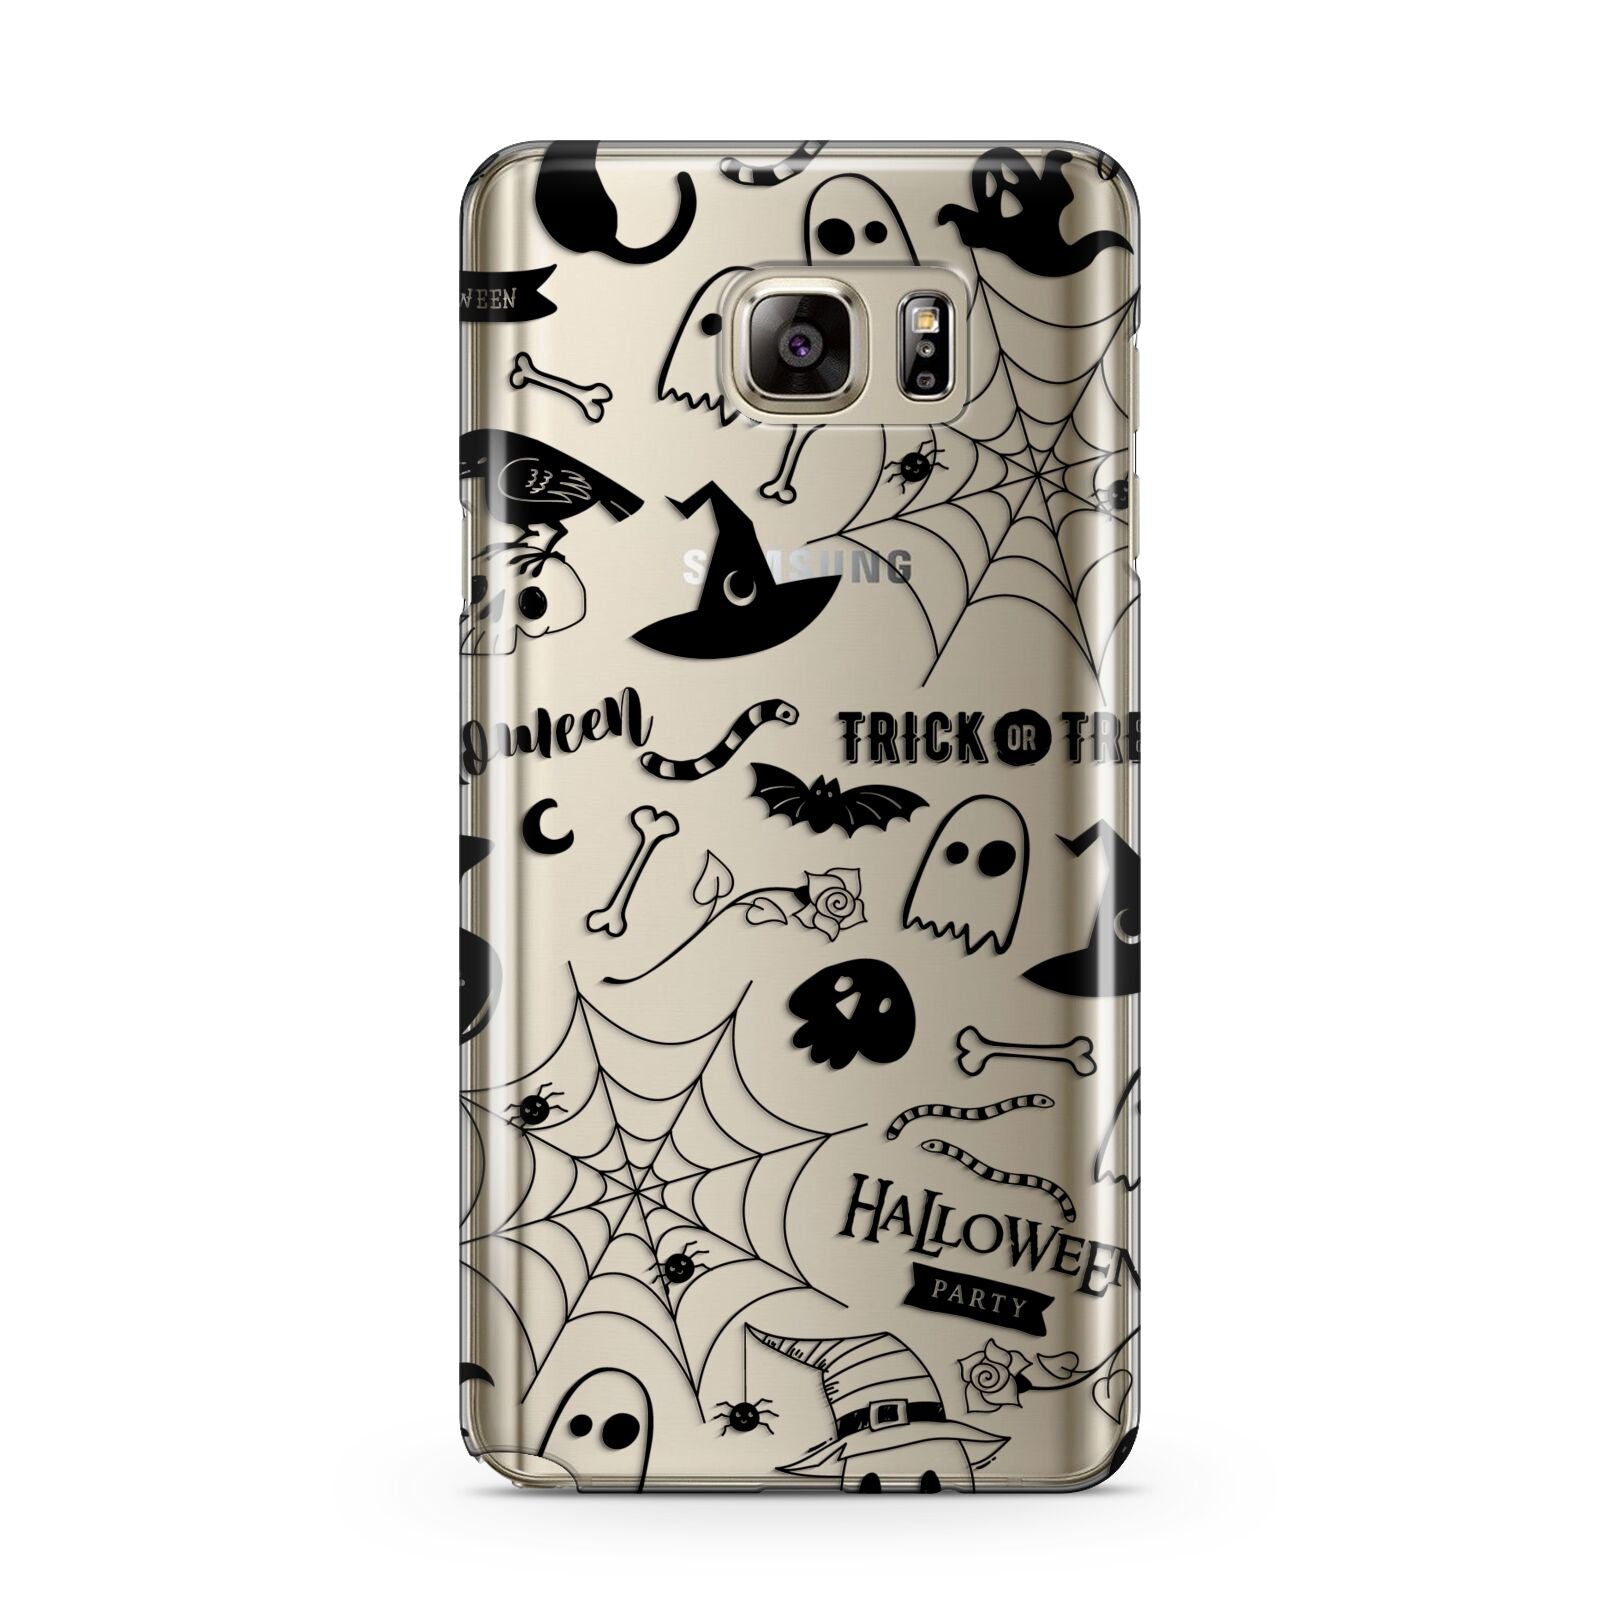 Monochrome Halloween Illustrations Samsung Galaxy Note 5 Case